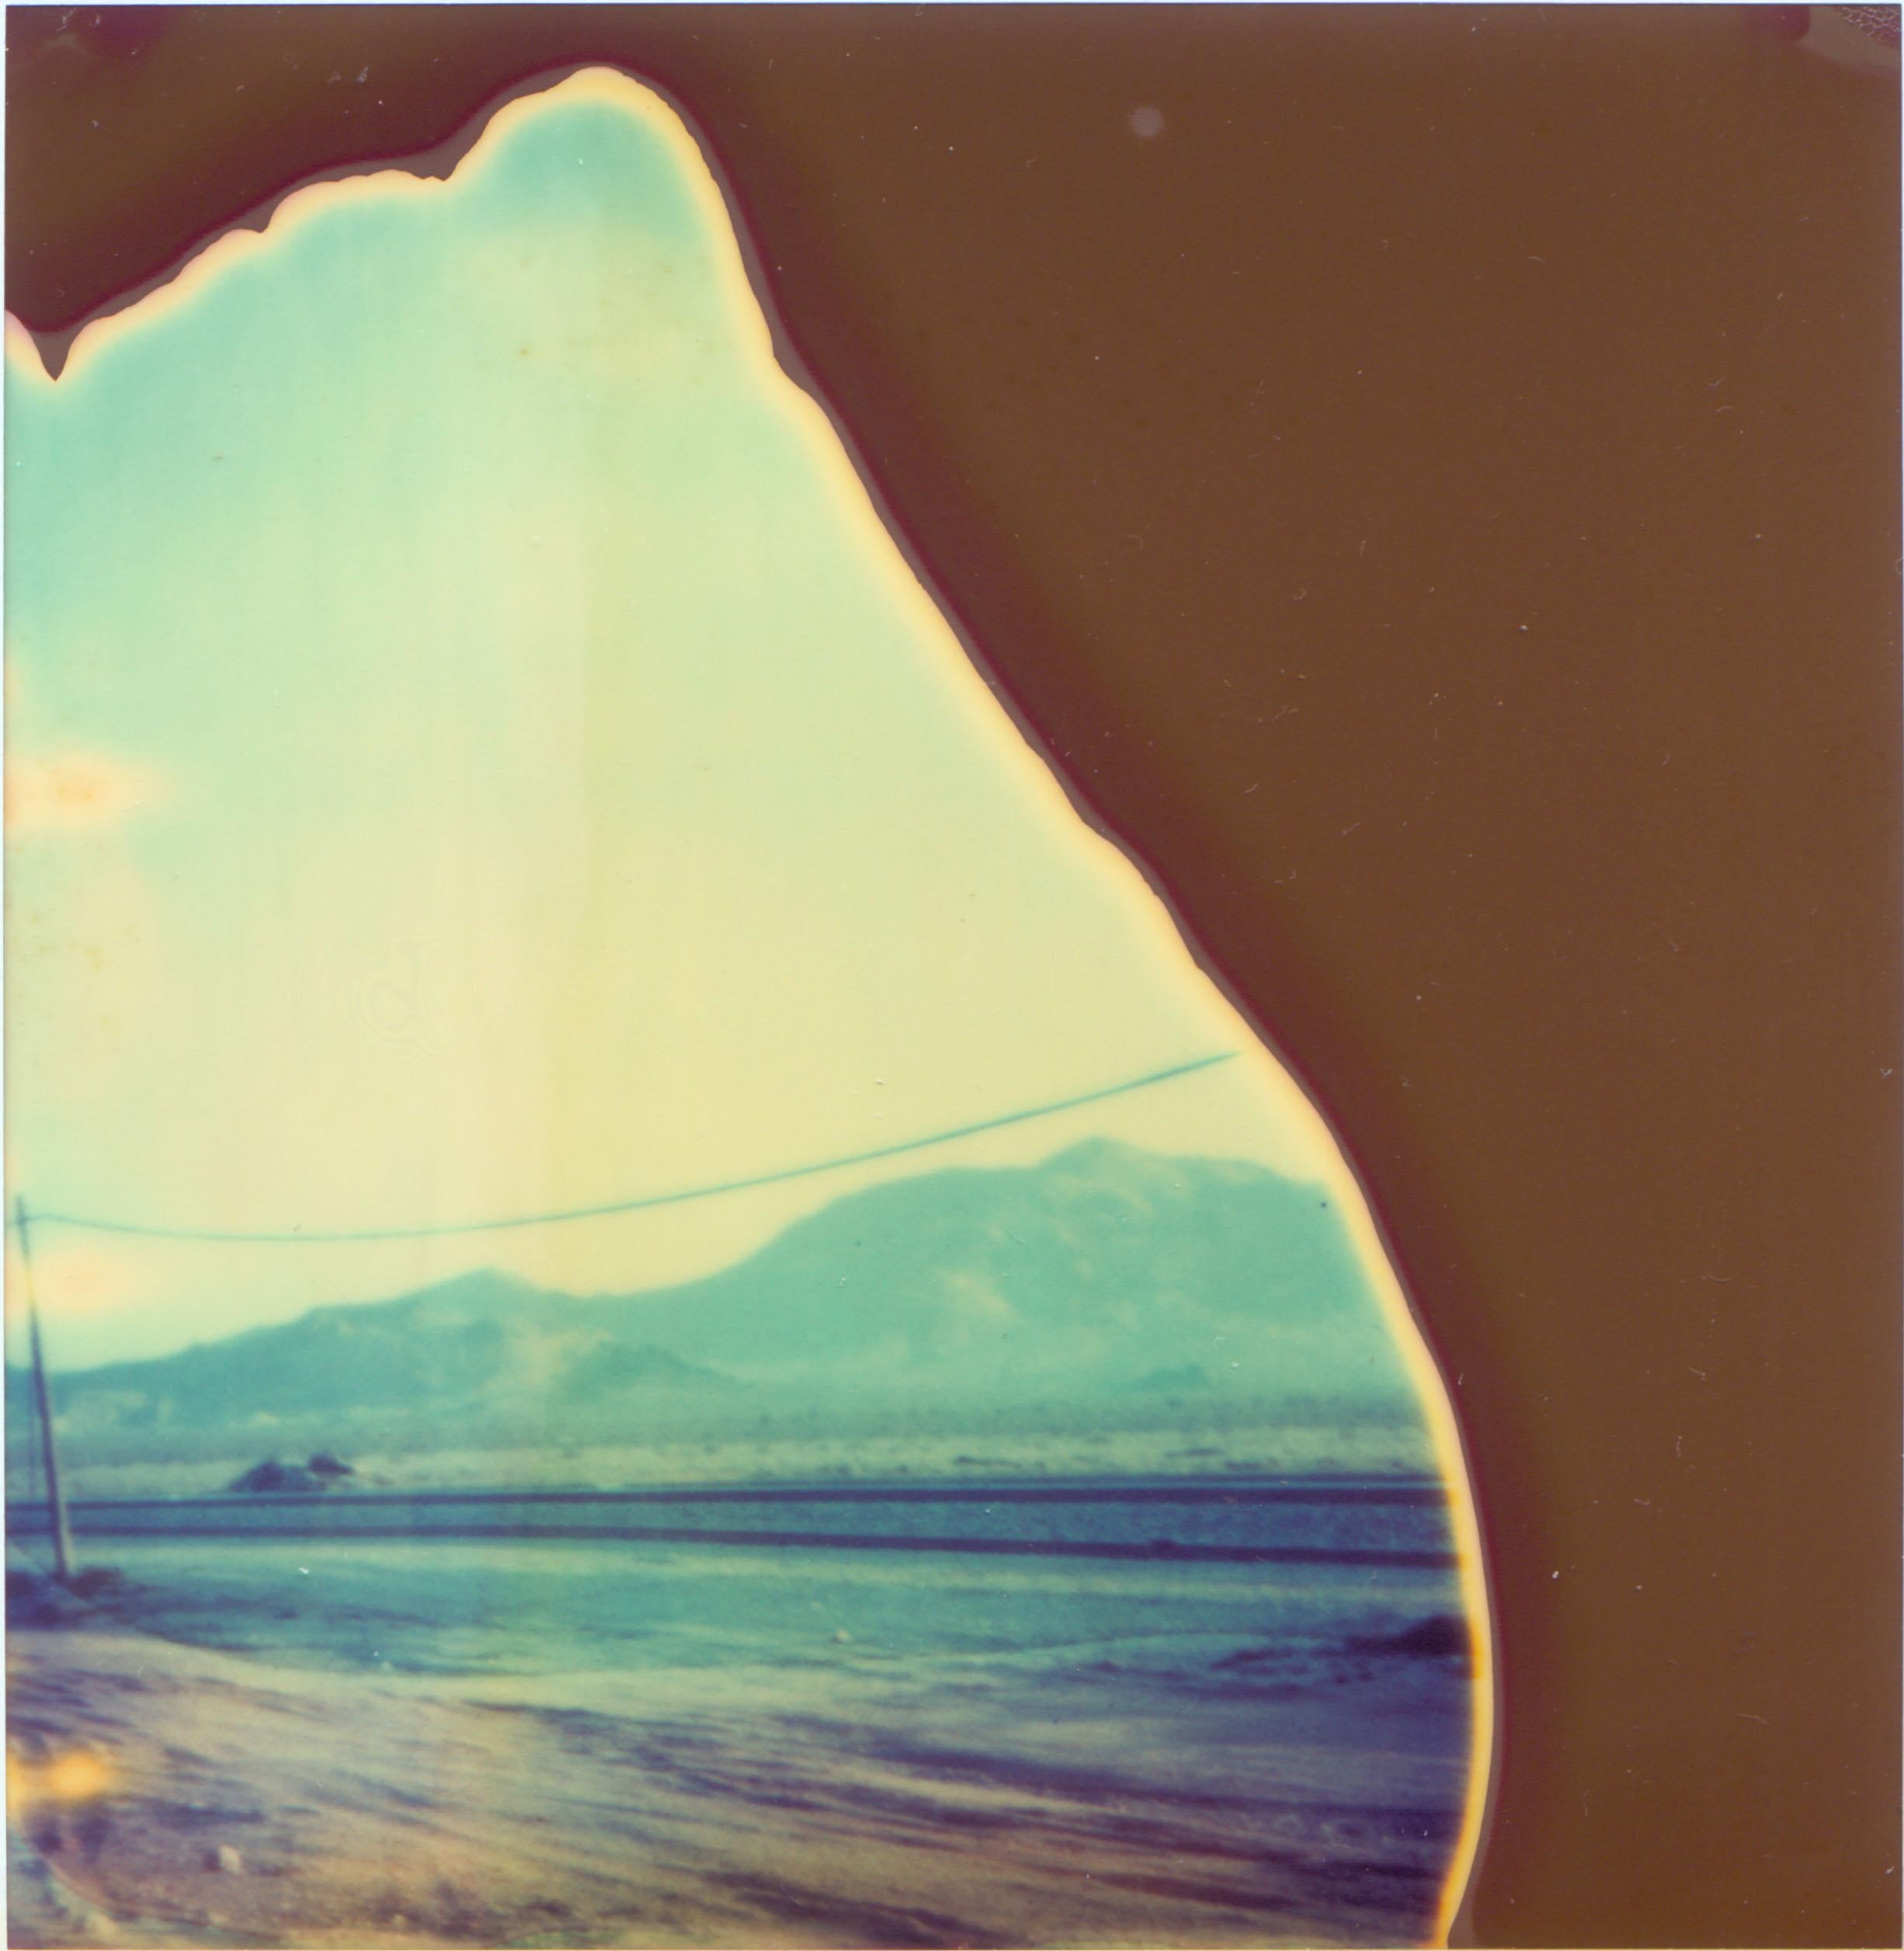 Stefanie Schneider Landscape Photograph - Untitled (Traintracks) - based on a Polaroid